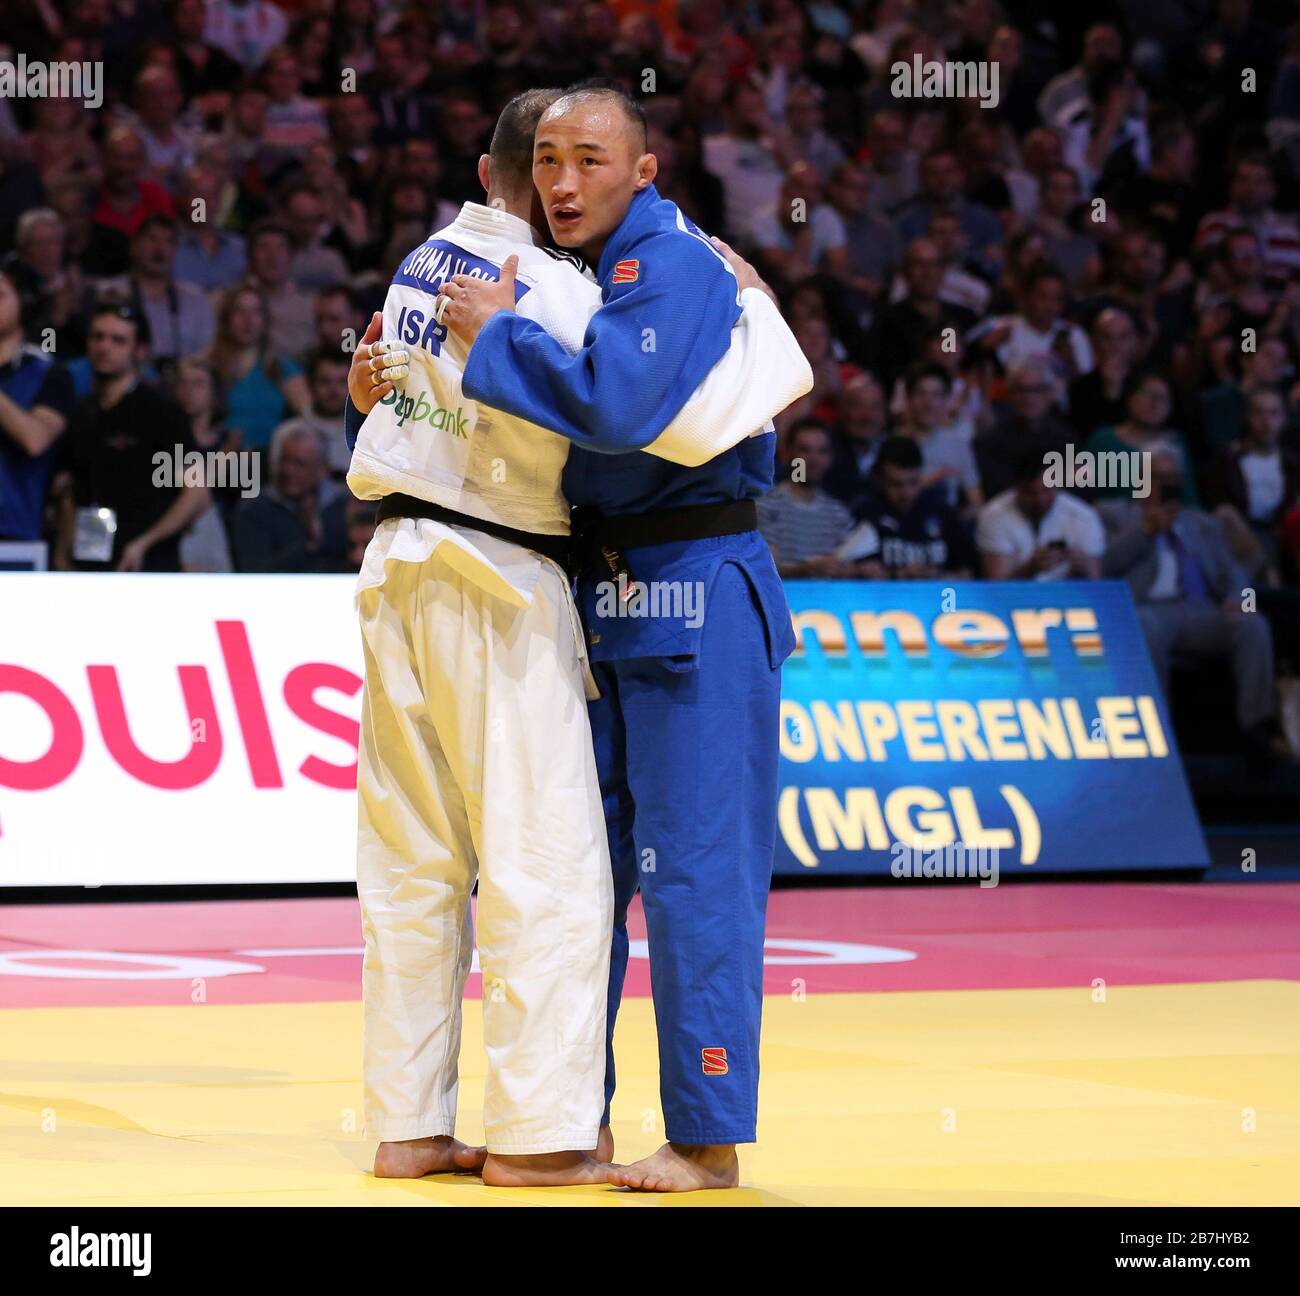 Paris, France - 08th Feb, 2020: Baruch Shmailov for Israel against Baskhuu Yondonperenei for Mongolia, Men's -66 kg, Bronze Medal Match (Credit: Mickael Chavet) Stock Photo